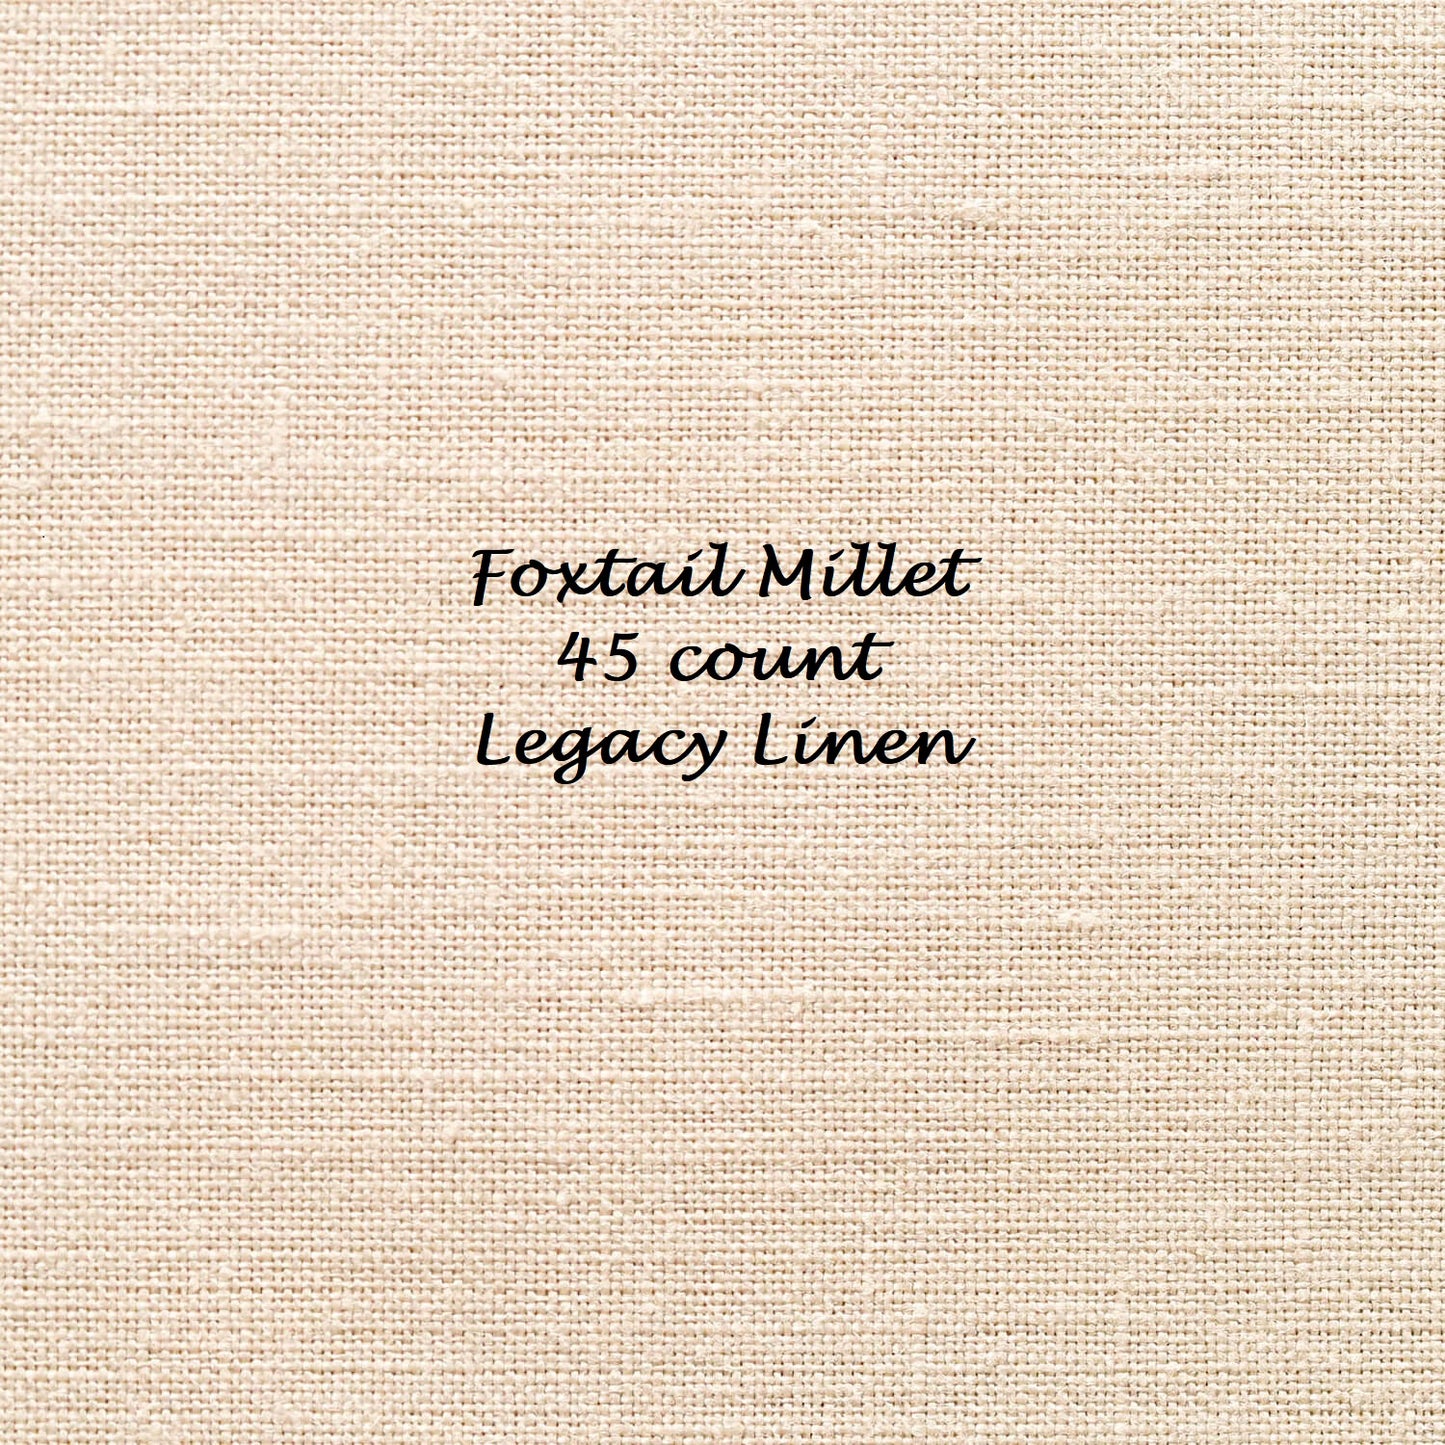 45 count Legacy Linen - Foxtail Millet